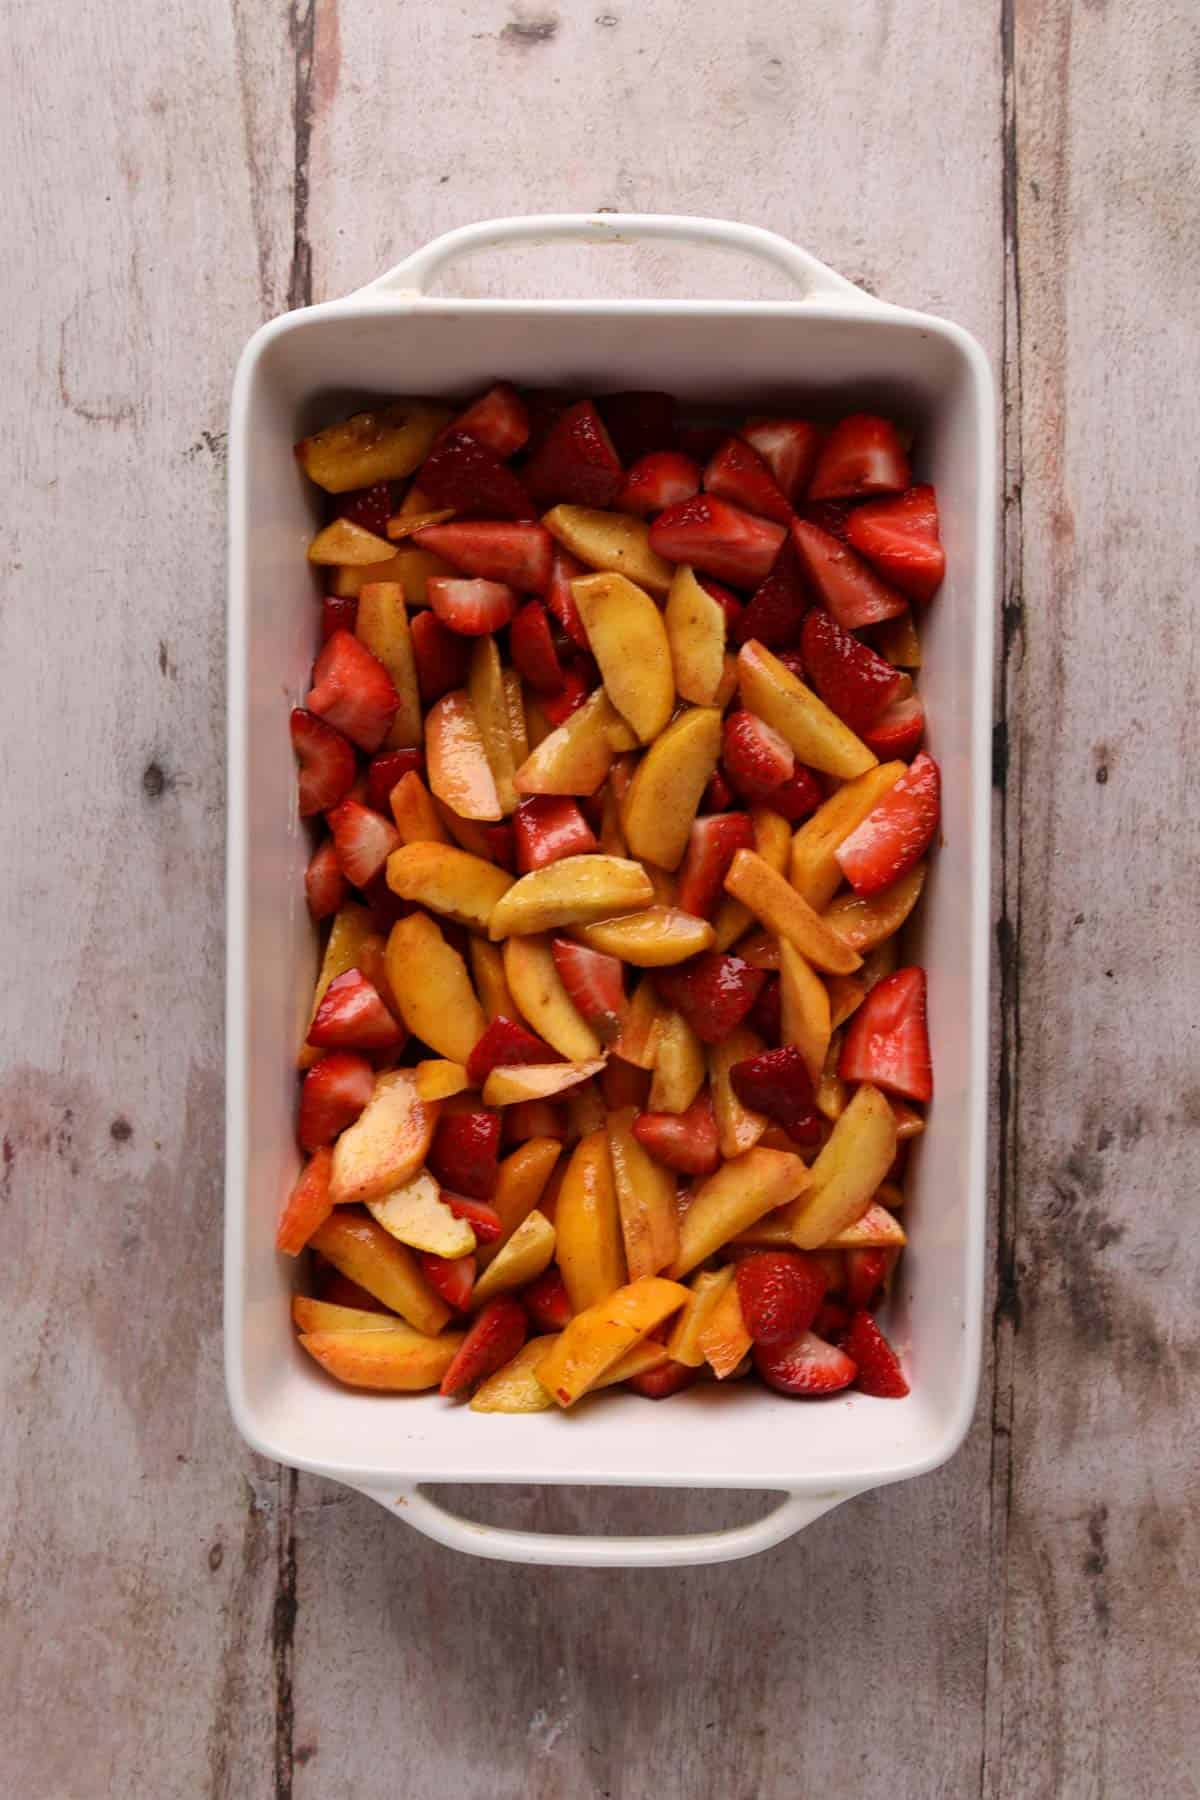 Strawberry peach filling spread in an even layer in a white ceramic 8x11 baking dish.